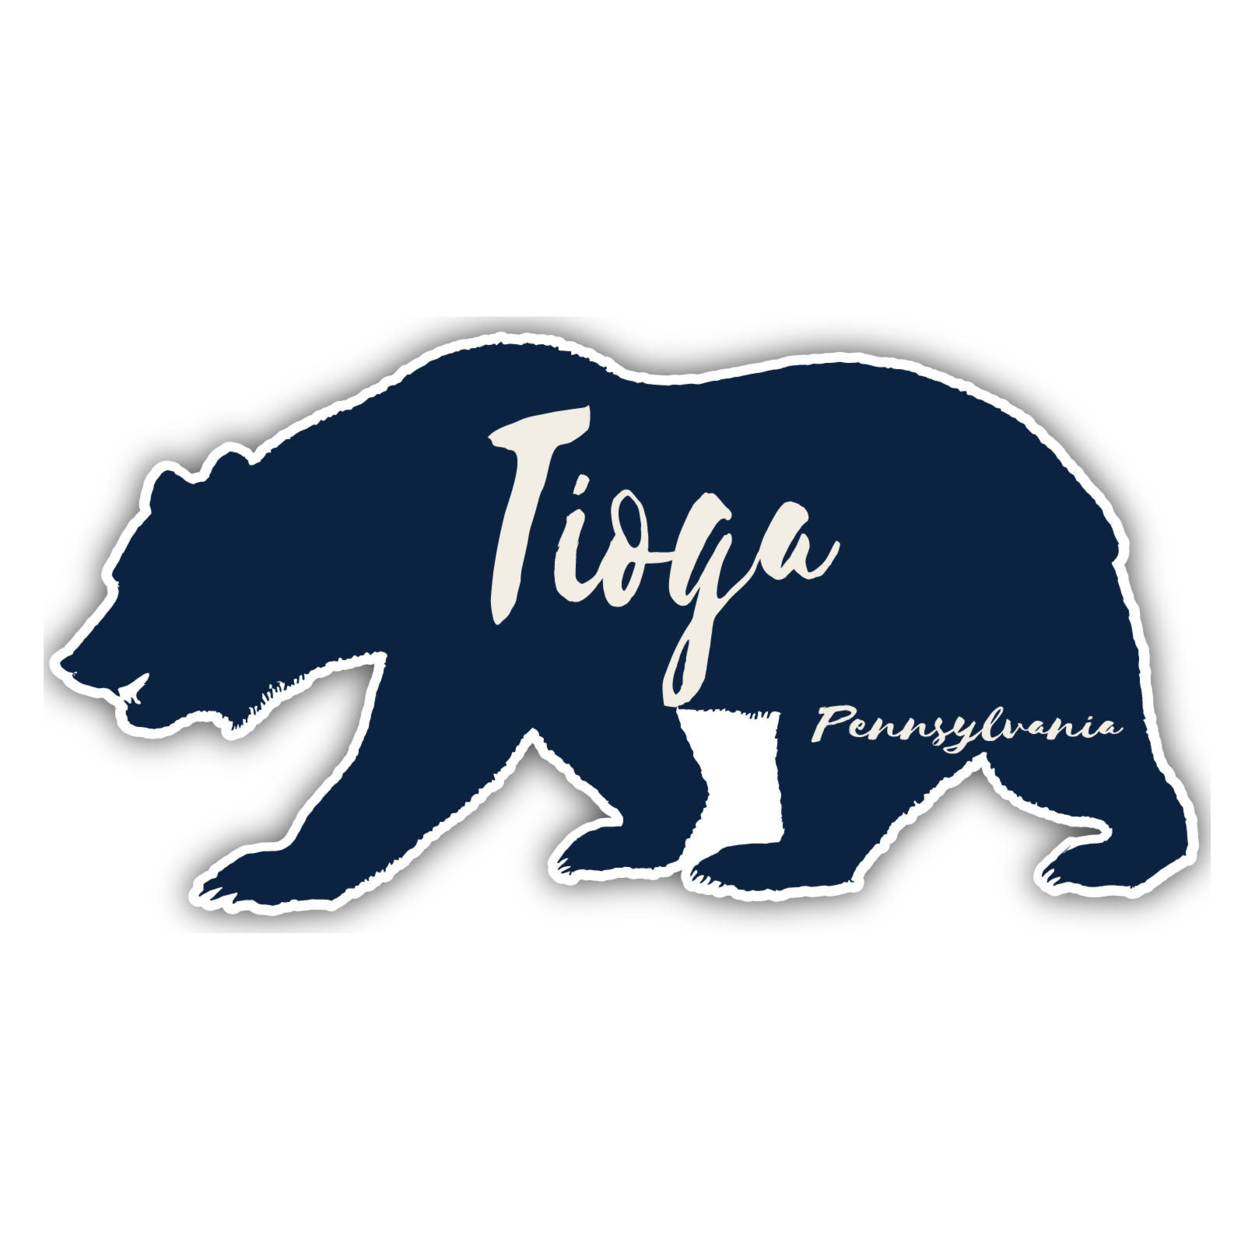 Tioga Pennsylvania Souvenir Decorative Stickers (Choose Theme And Size) - Single Unit, 4-Inch, Great Outdoors